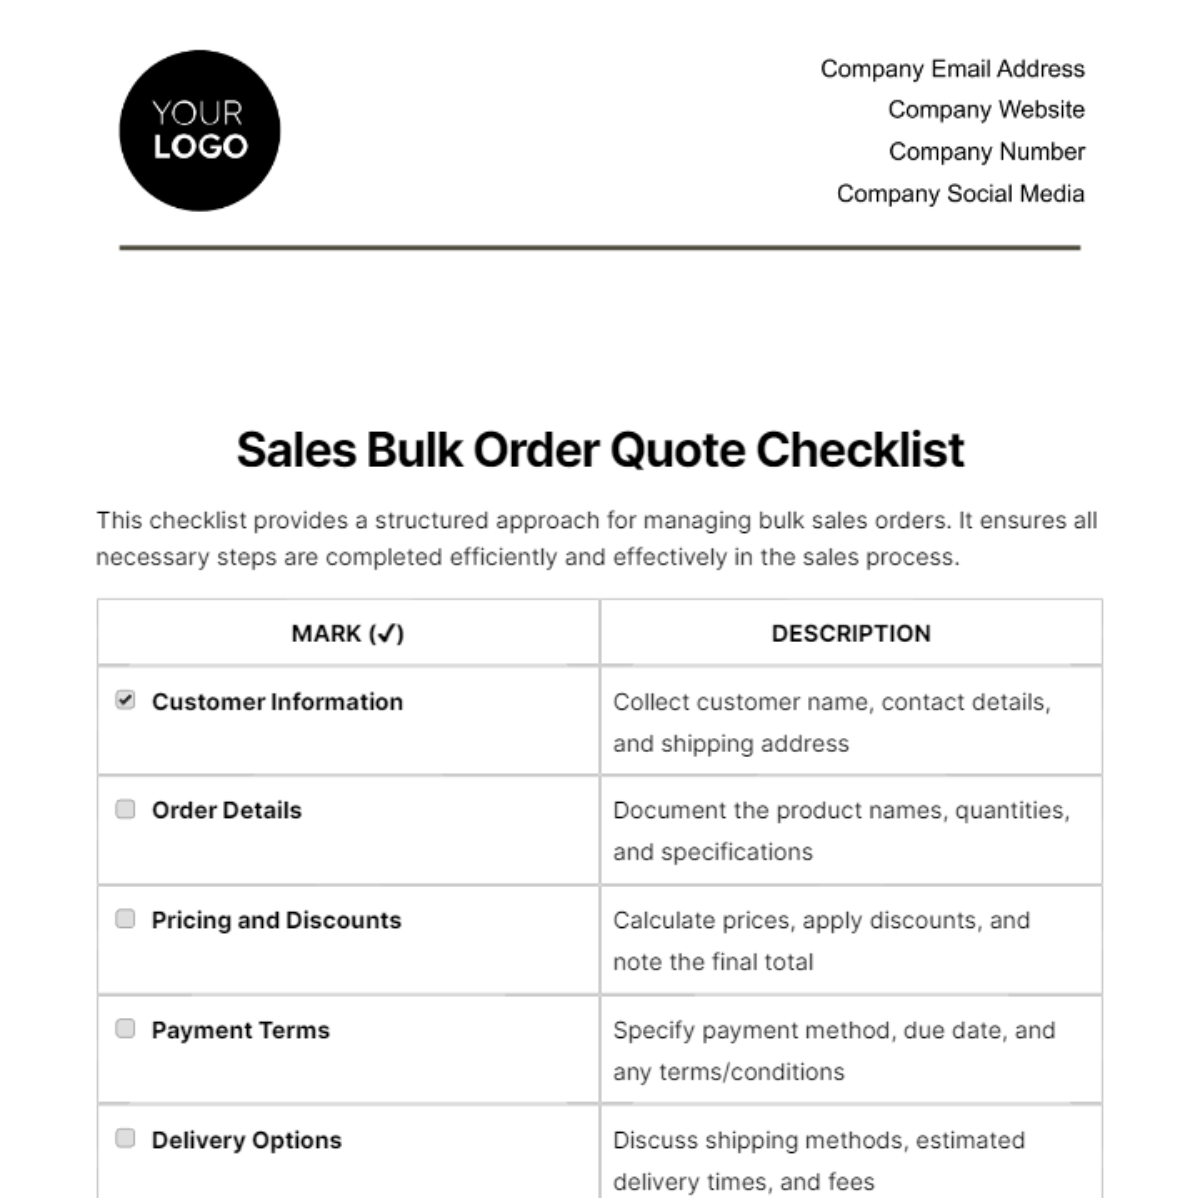 Free Sales Bulk Order Quote Checklist Template